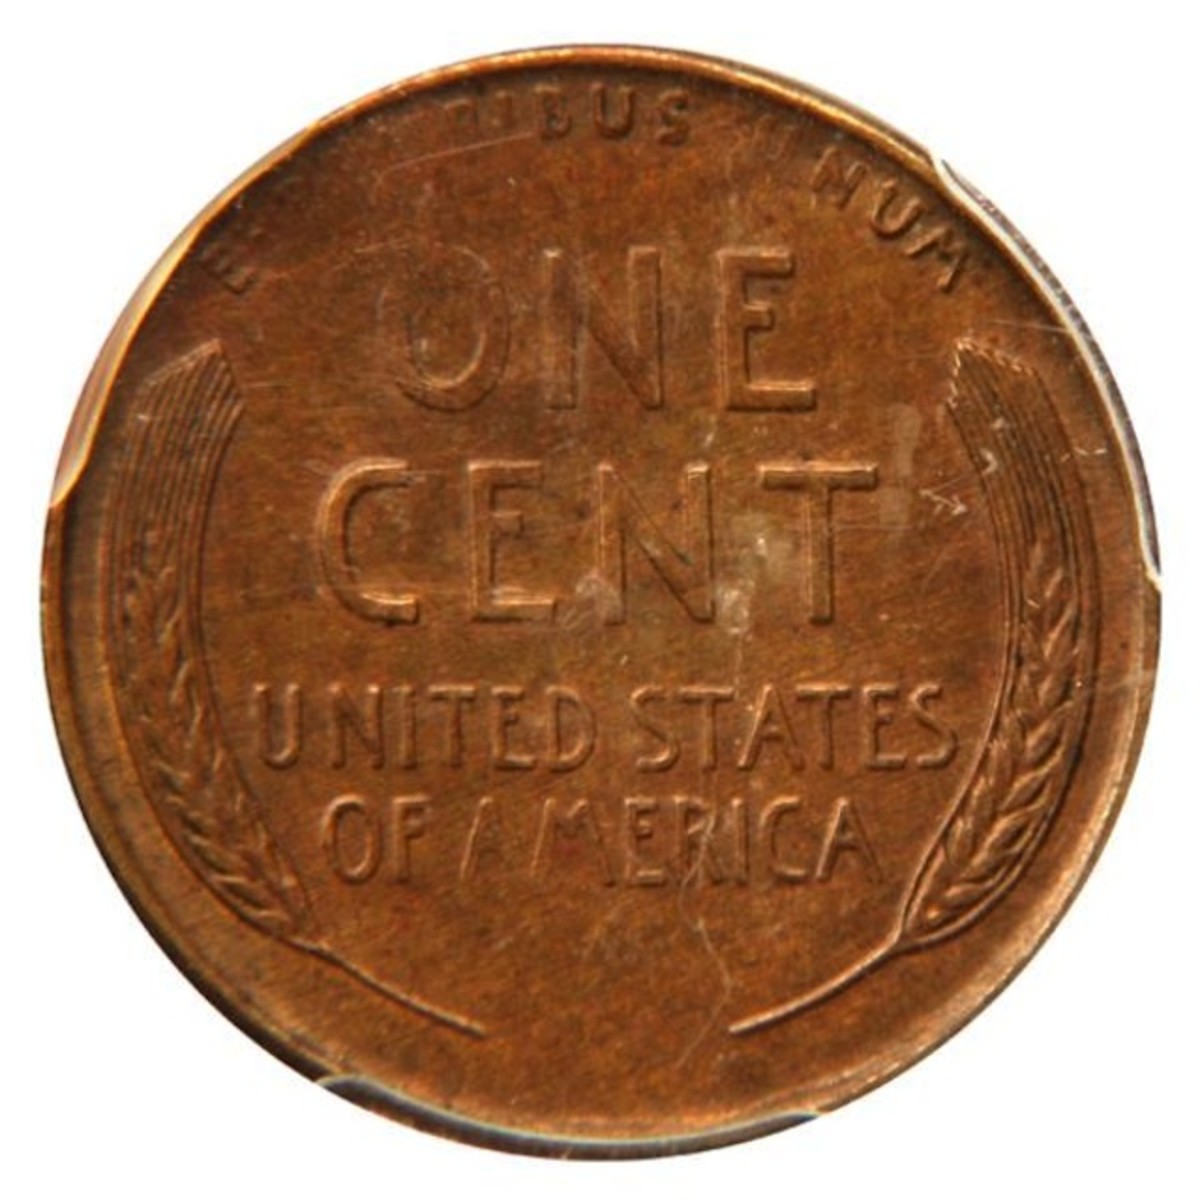 This 1943 bronze mint error cent in AU-55 brought $329,000.